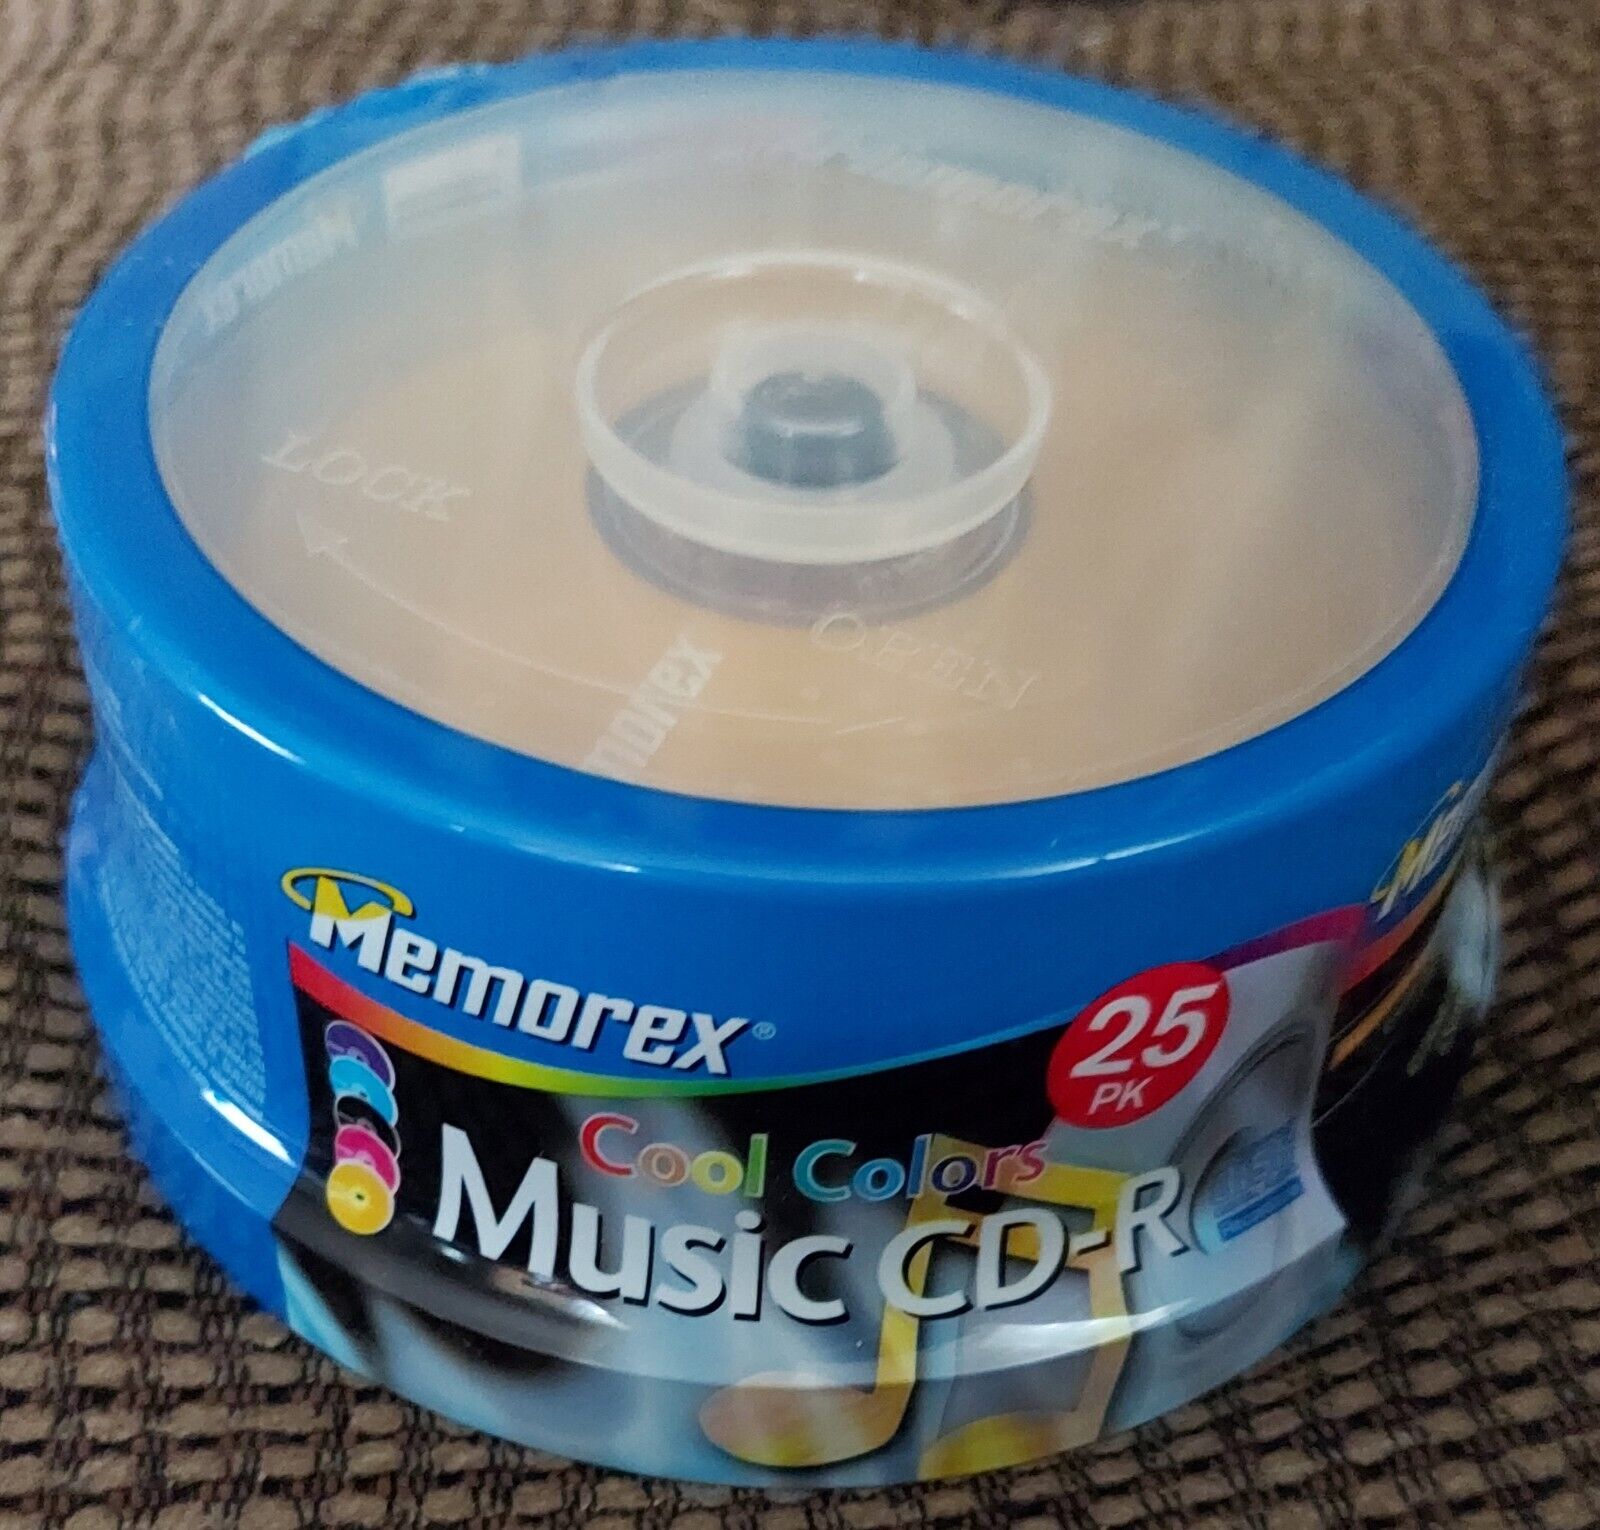 NEW FACTORY SEALED MEMOREX MUSIC CD-R COOL COLORS  25PK 700MB 80min 